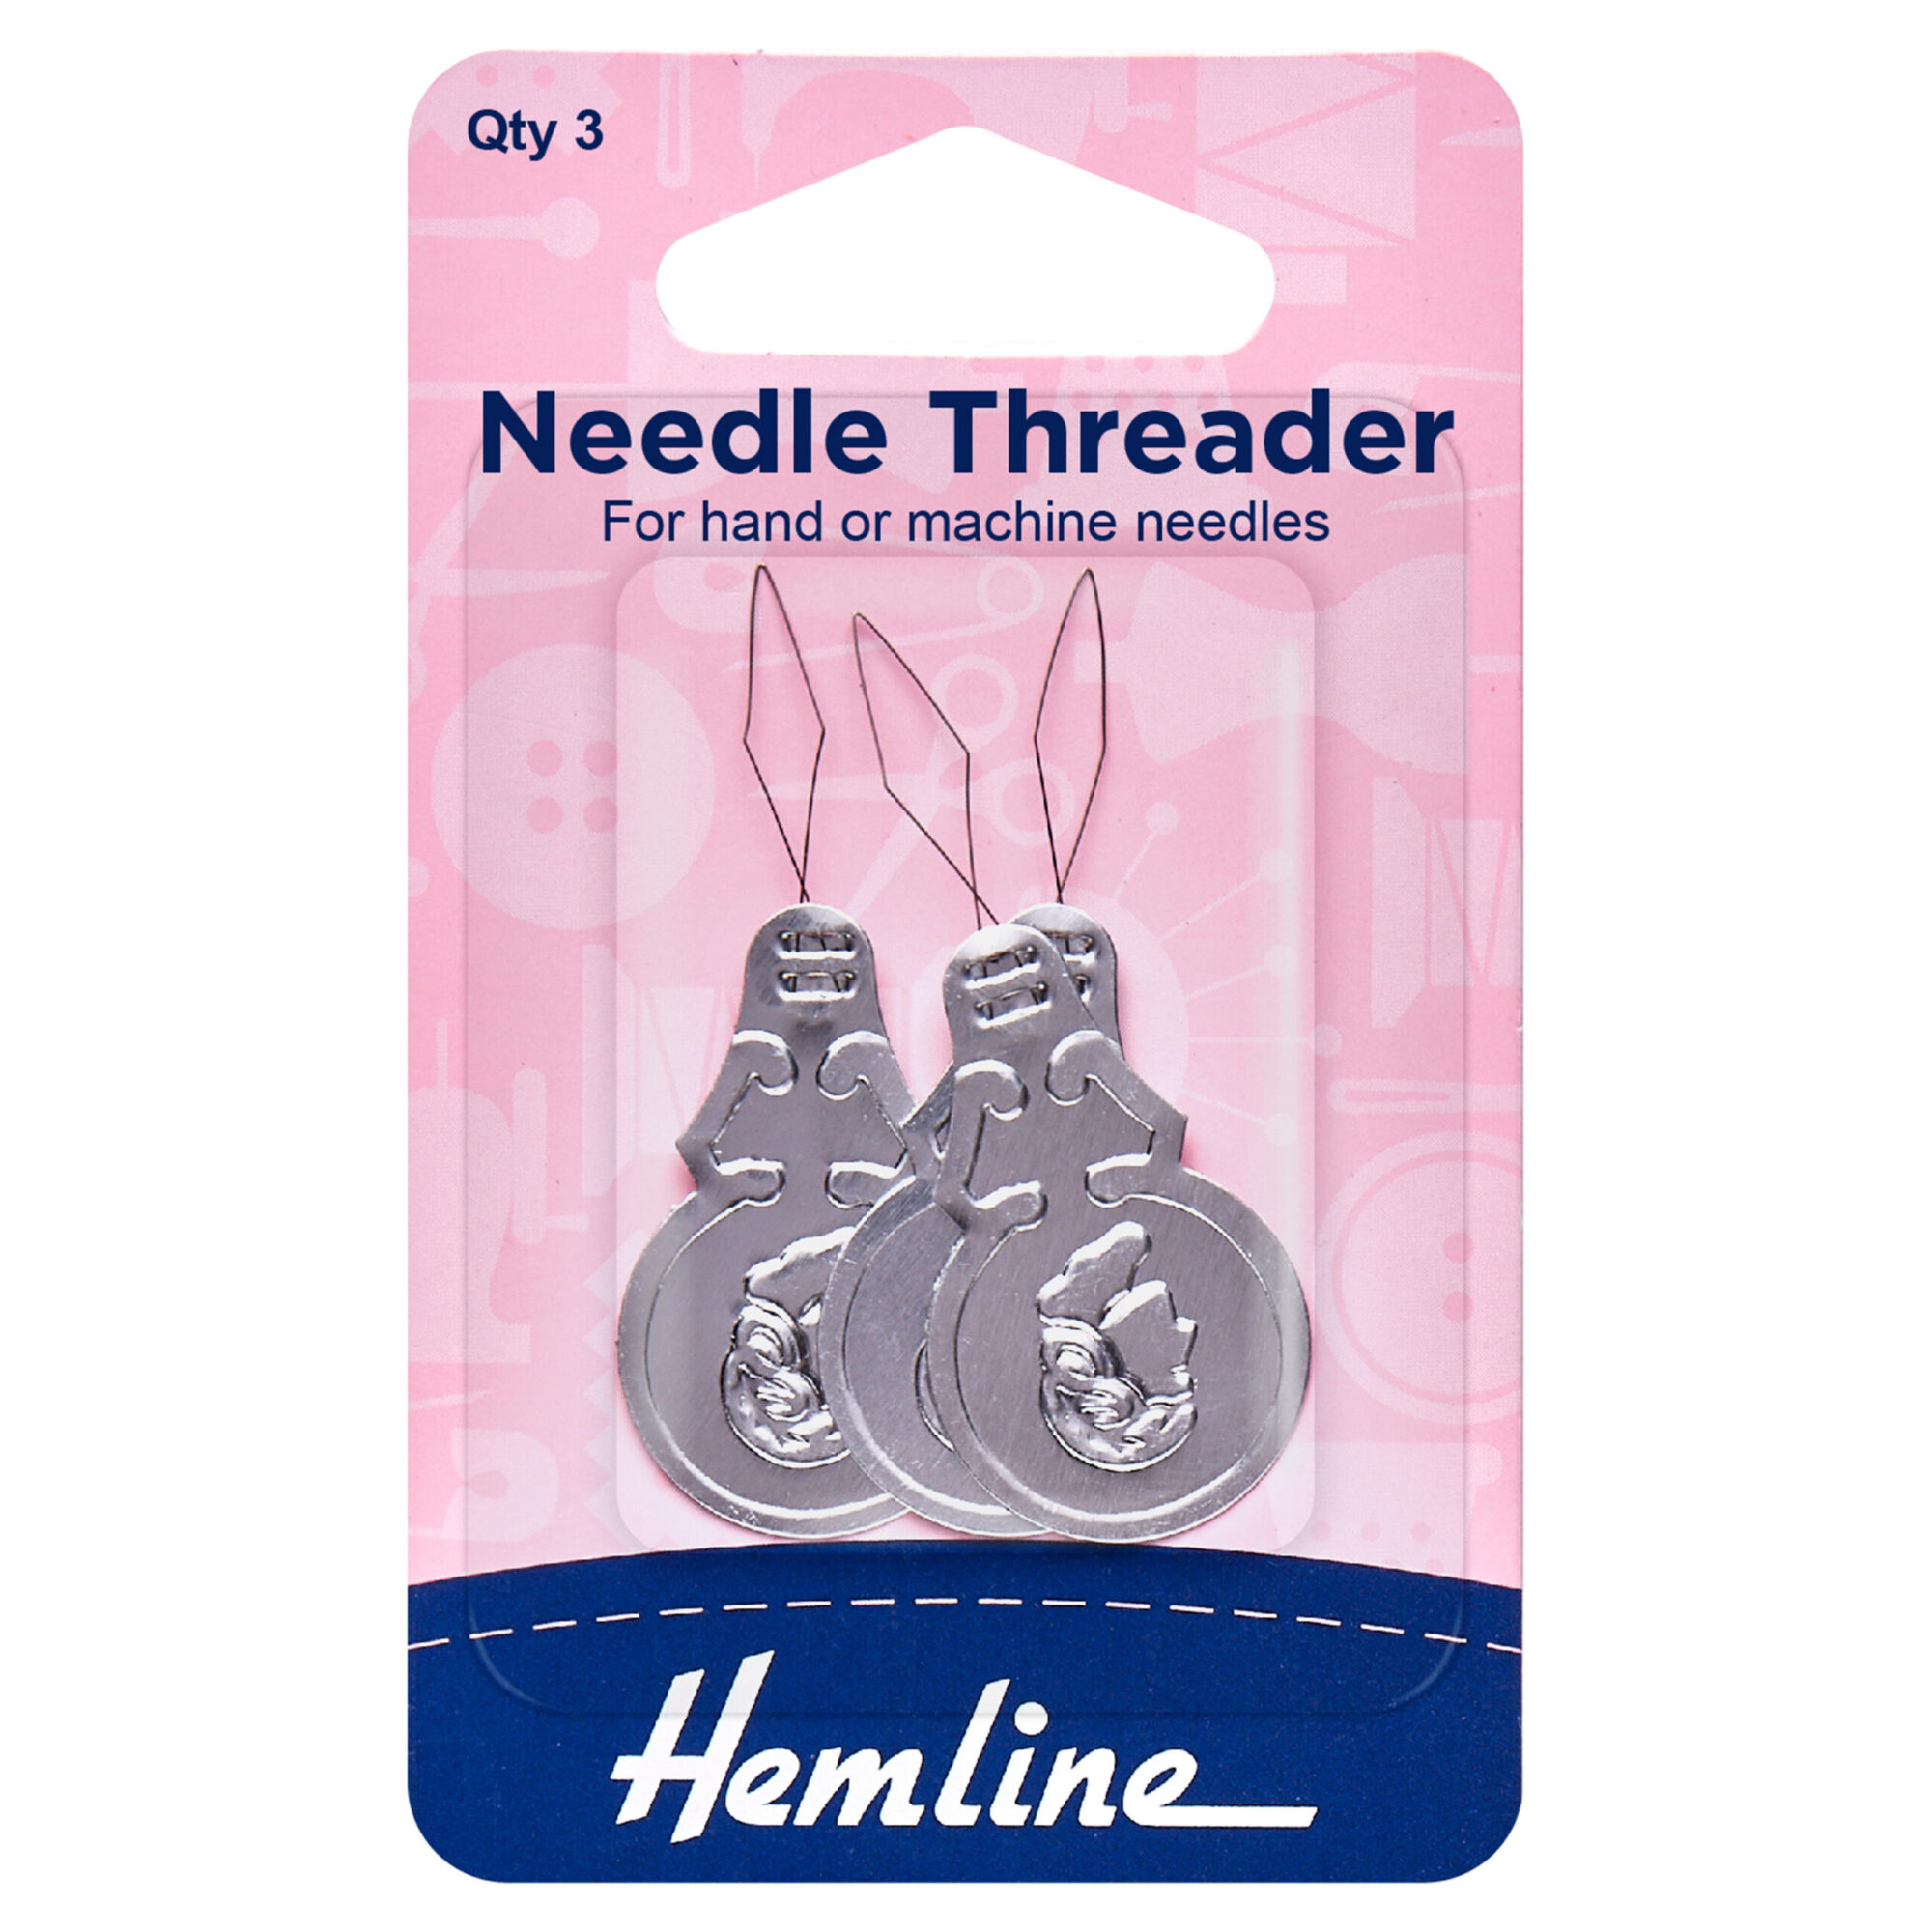 Hemline Needle Threaders product image